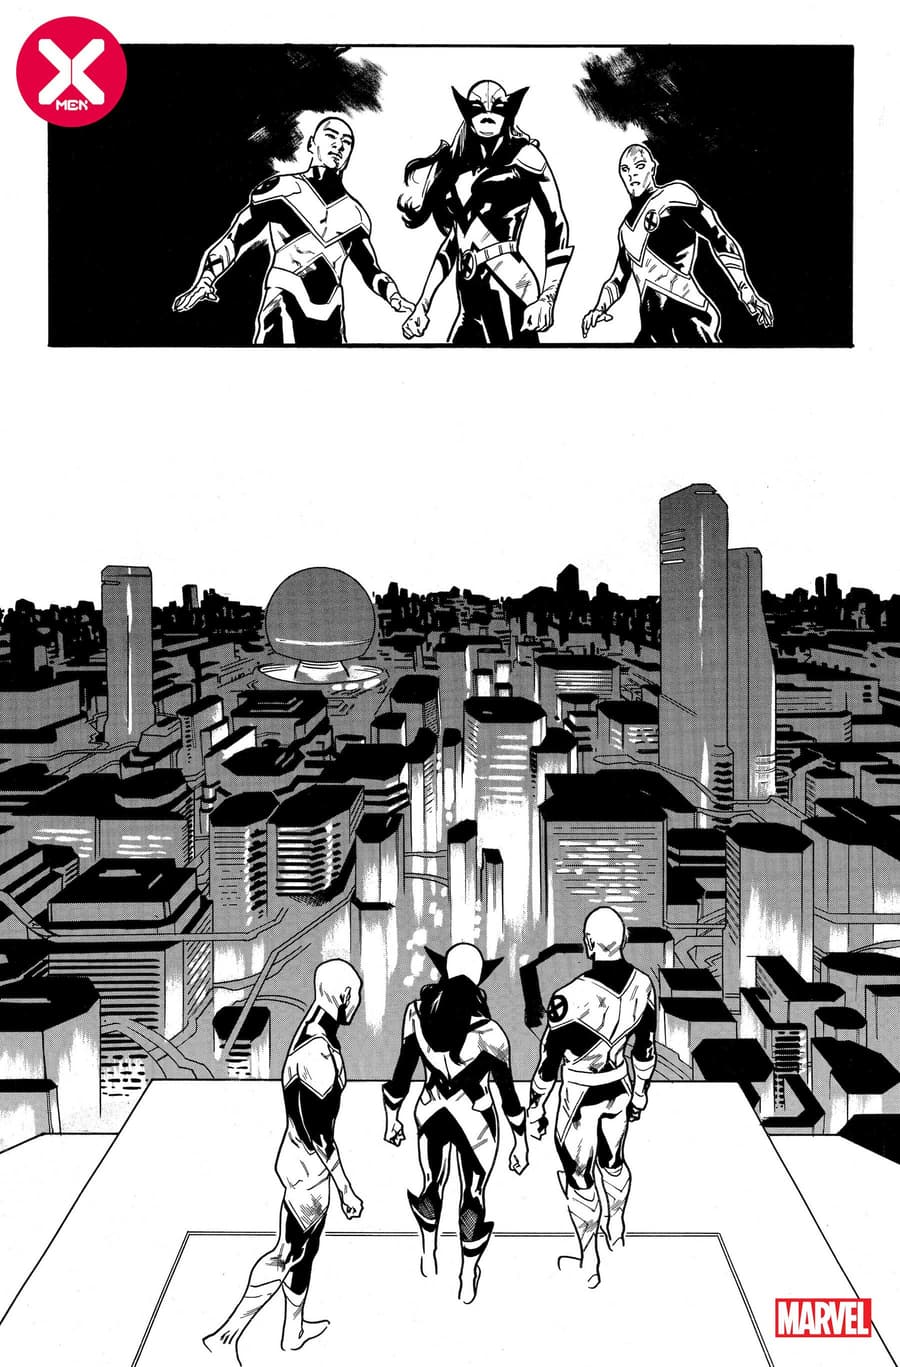 X-MEN #18 preview inks by Mahmud Asrar